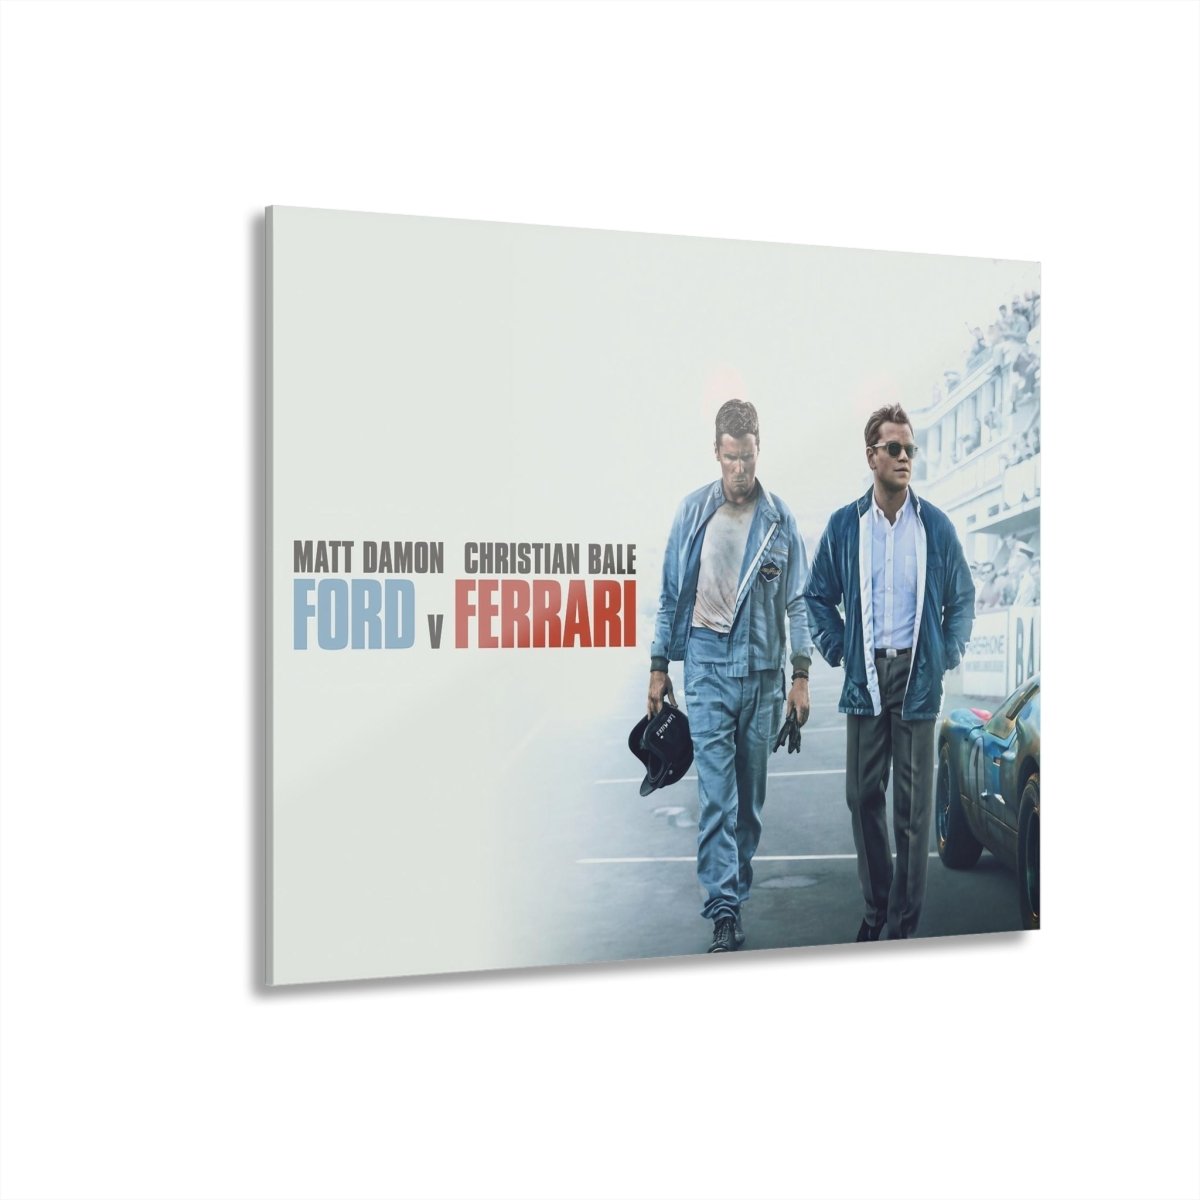 Ford v Ferrari Movie Poster Acrylic High Quality Print - Wall Art - Car Enthusiast Gift - Movie Buff - Landscape - Sizes 14x11 and 20x16 - Home Decor - AI Print Spot